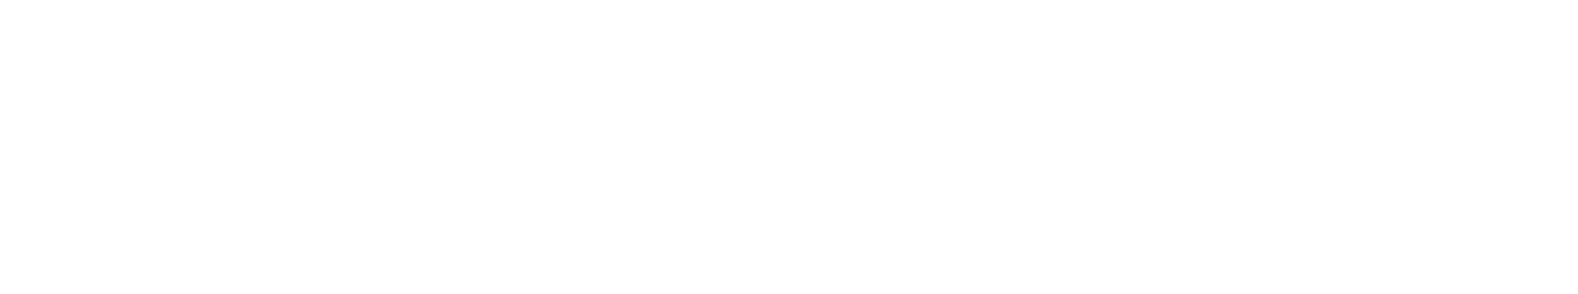 Aenza logo large for dark backgrounds (transparent PNG)